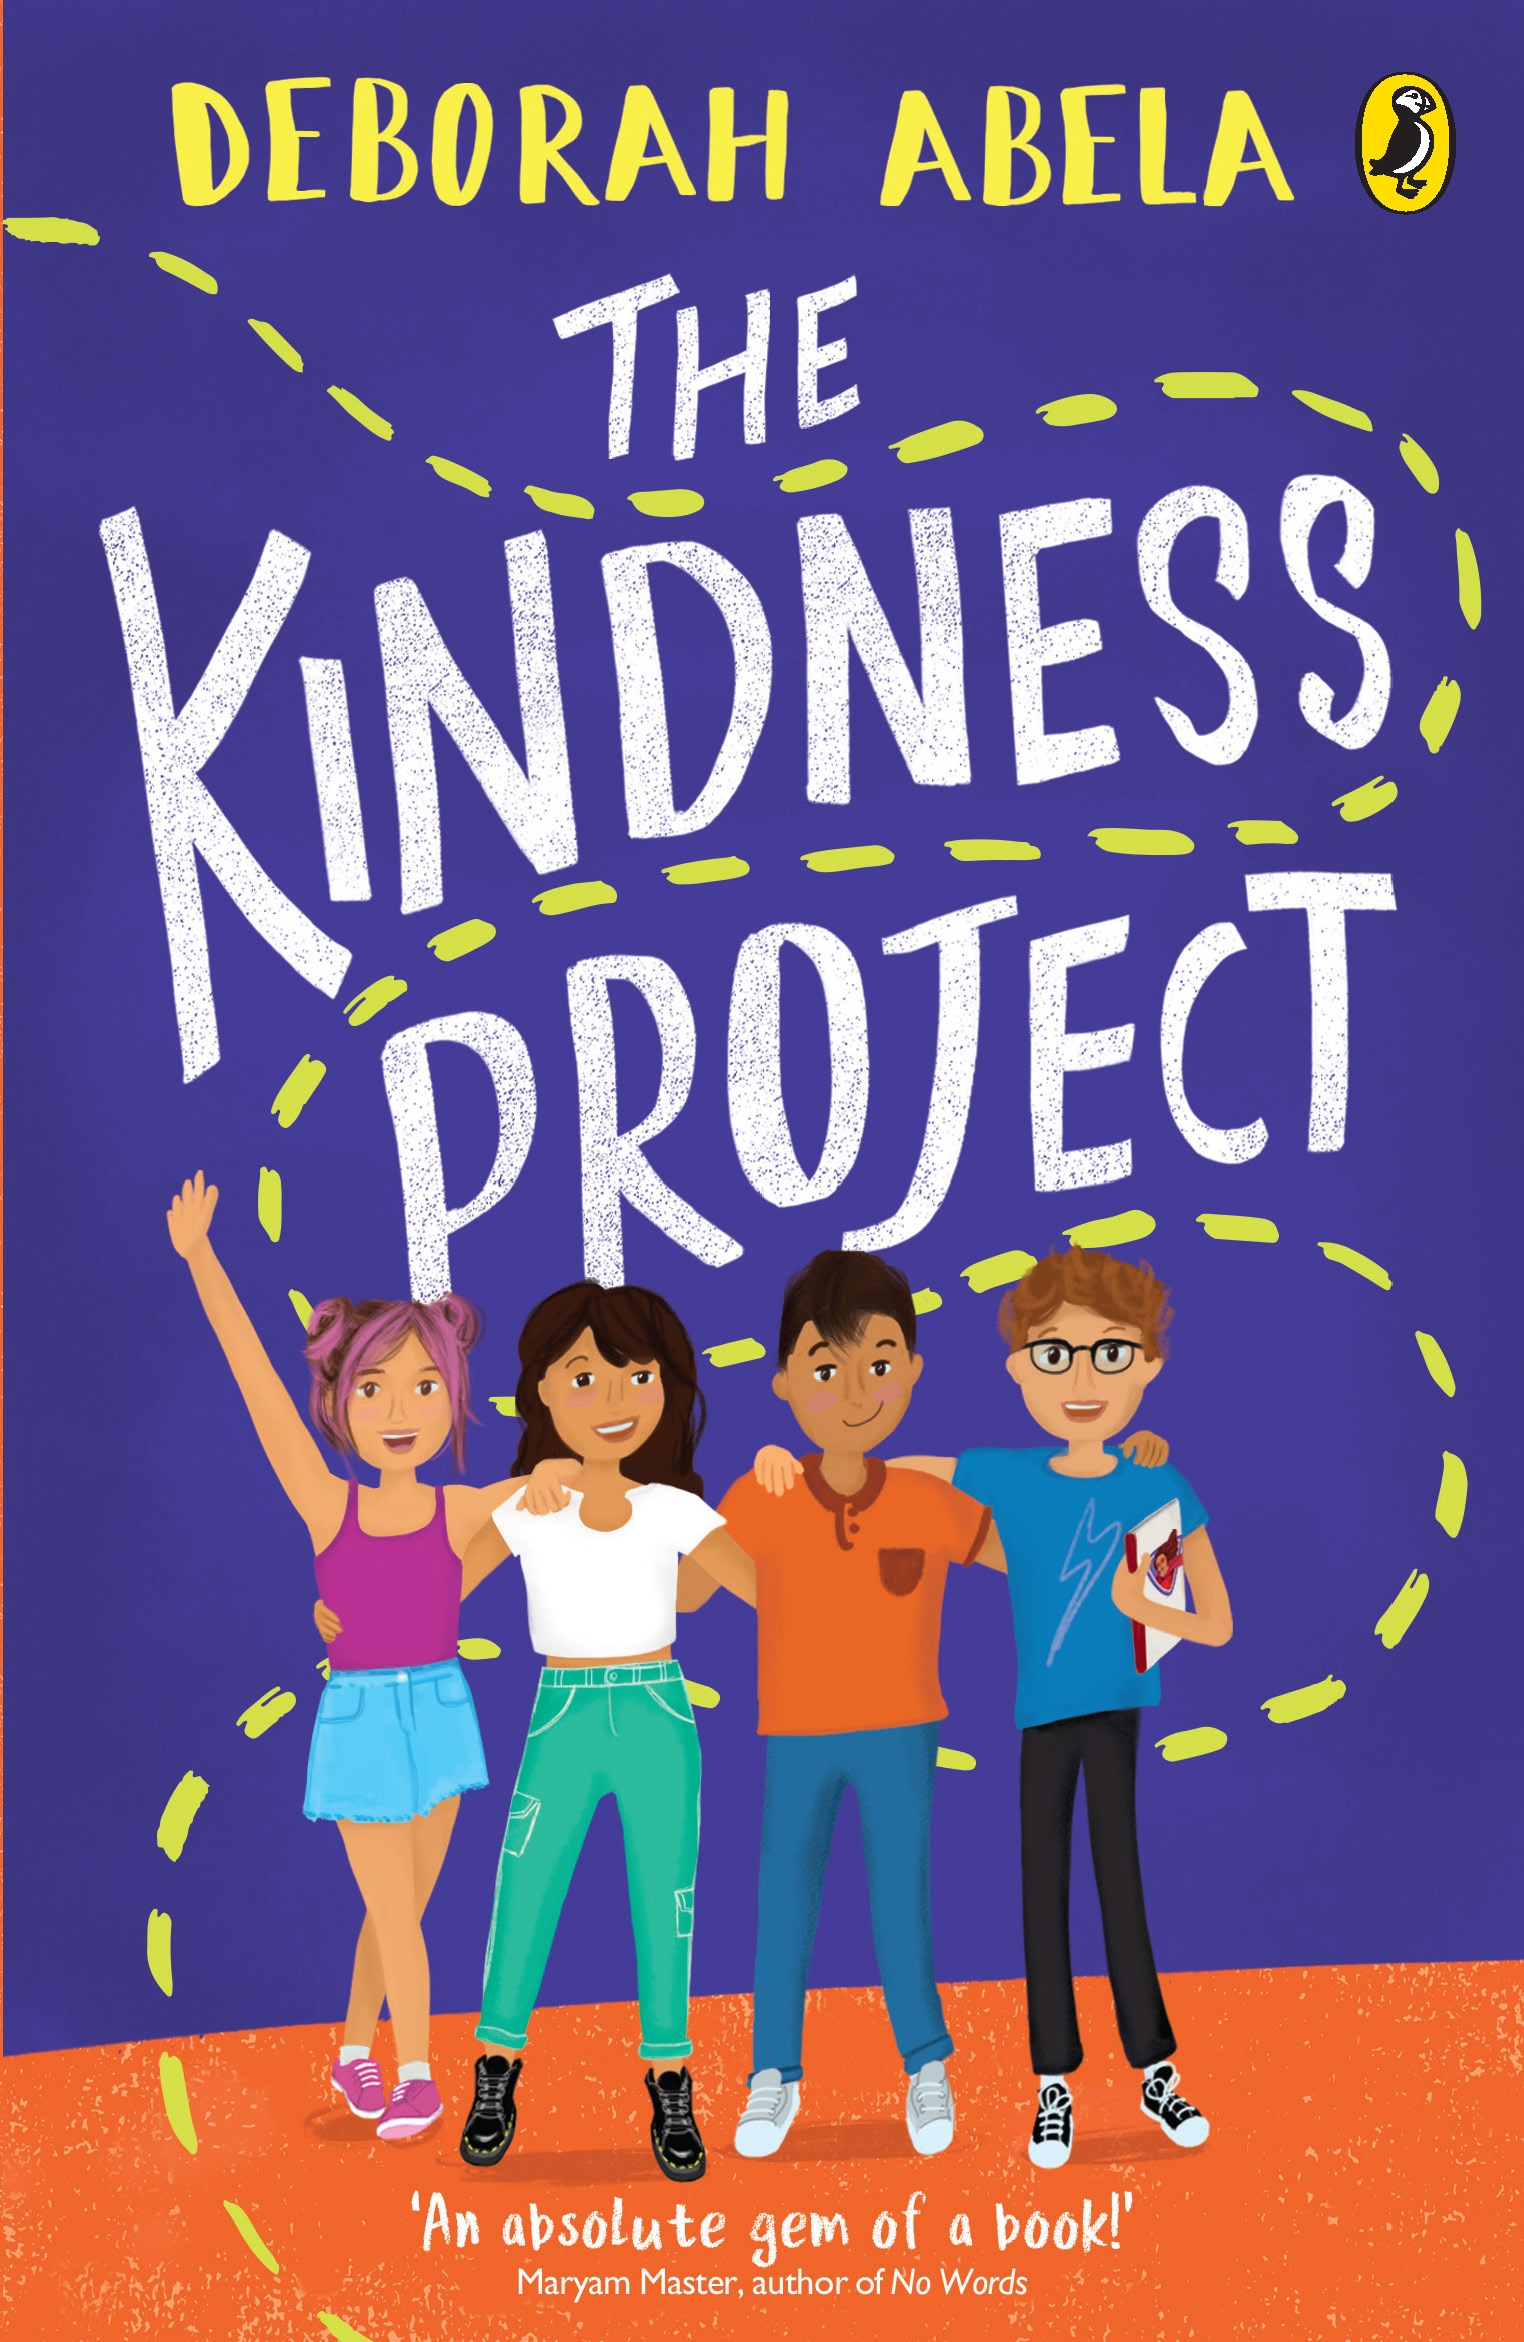 The Kindness Project by Deborah Abela